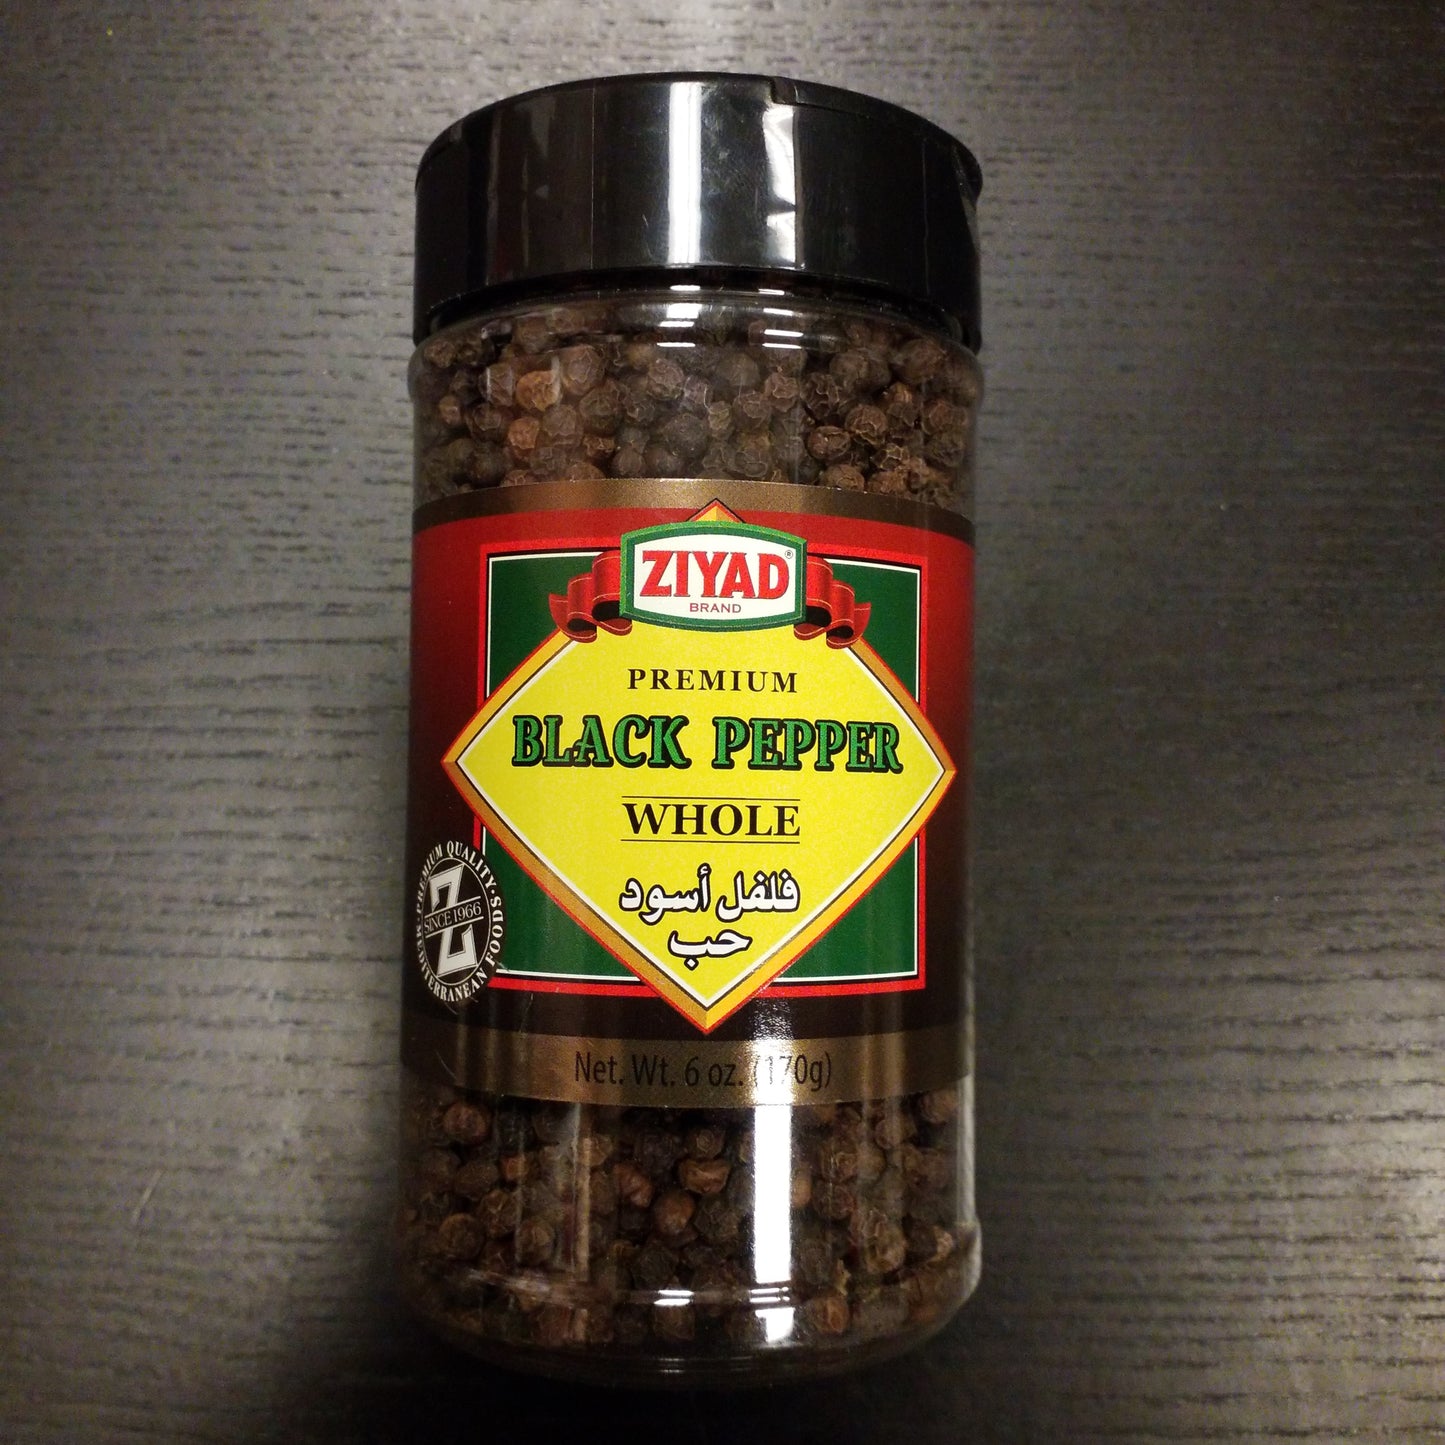 Ziyad premium black pepper whole 170g